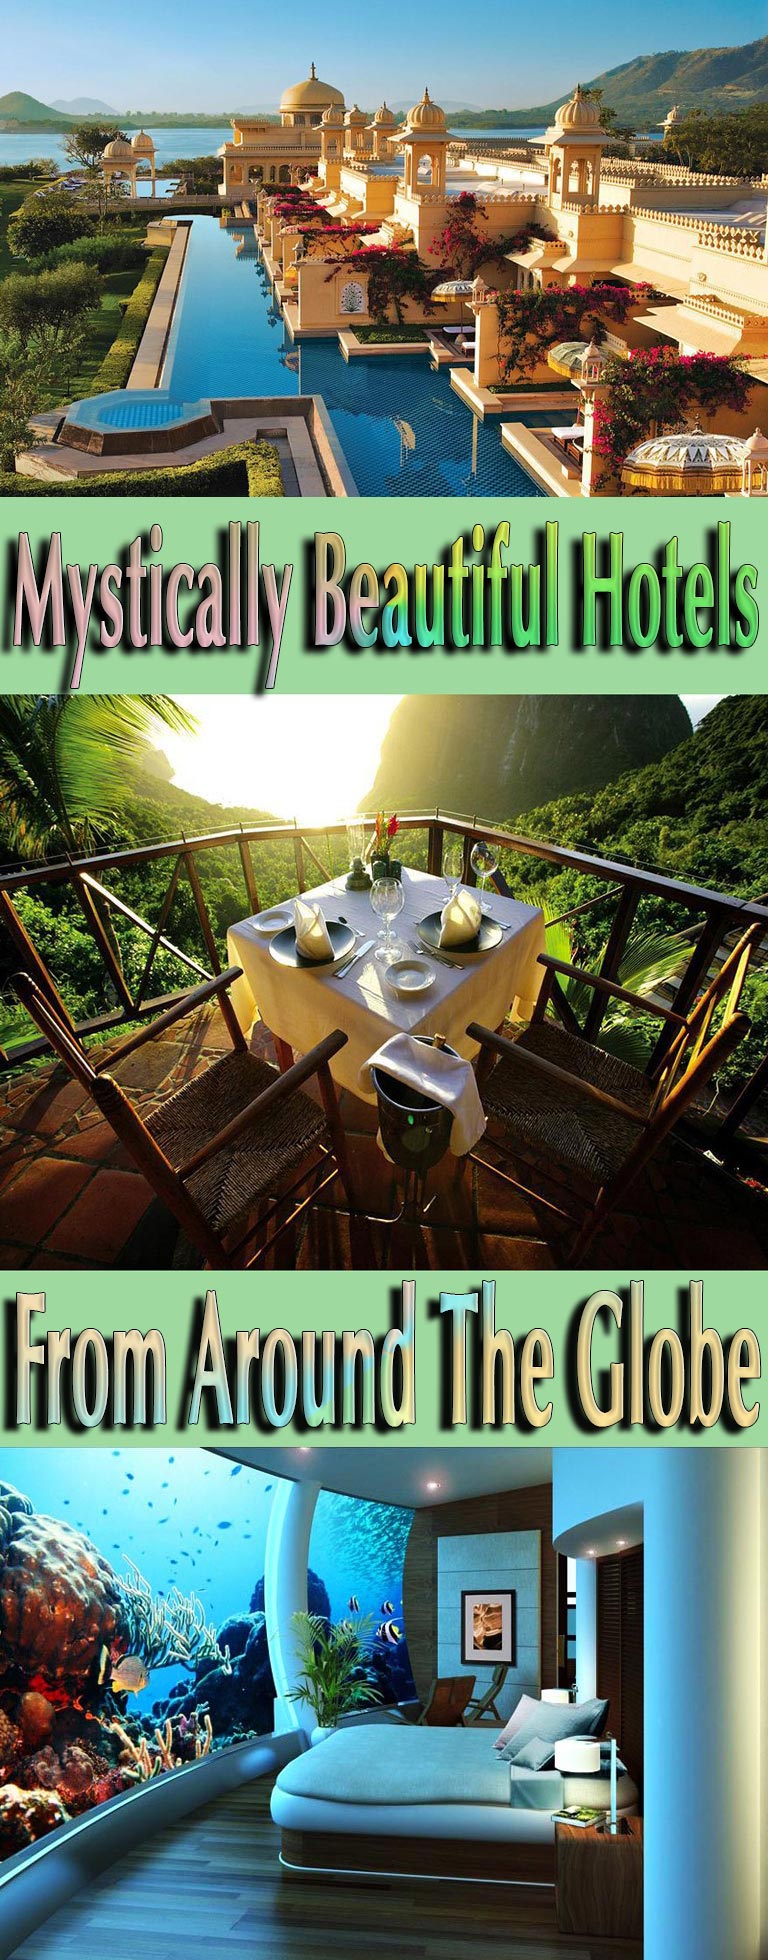 Mystically Beautiful Hotels From Around The Globe